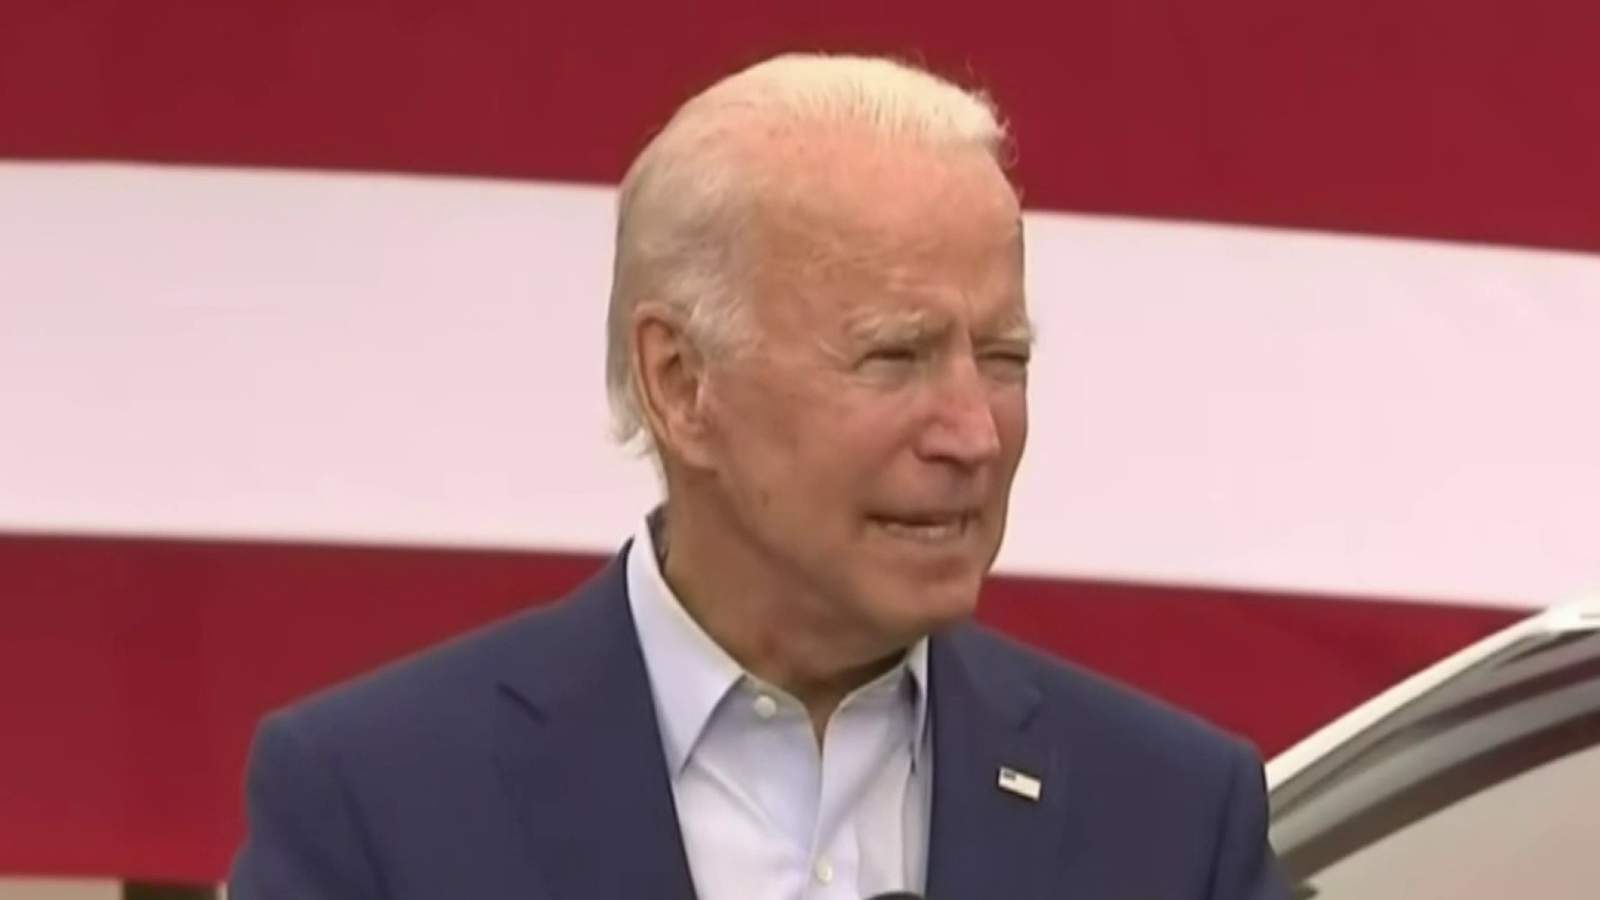 Presidential candidate Joe Biden makes campaign stop in Warren